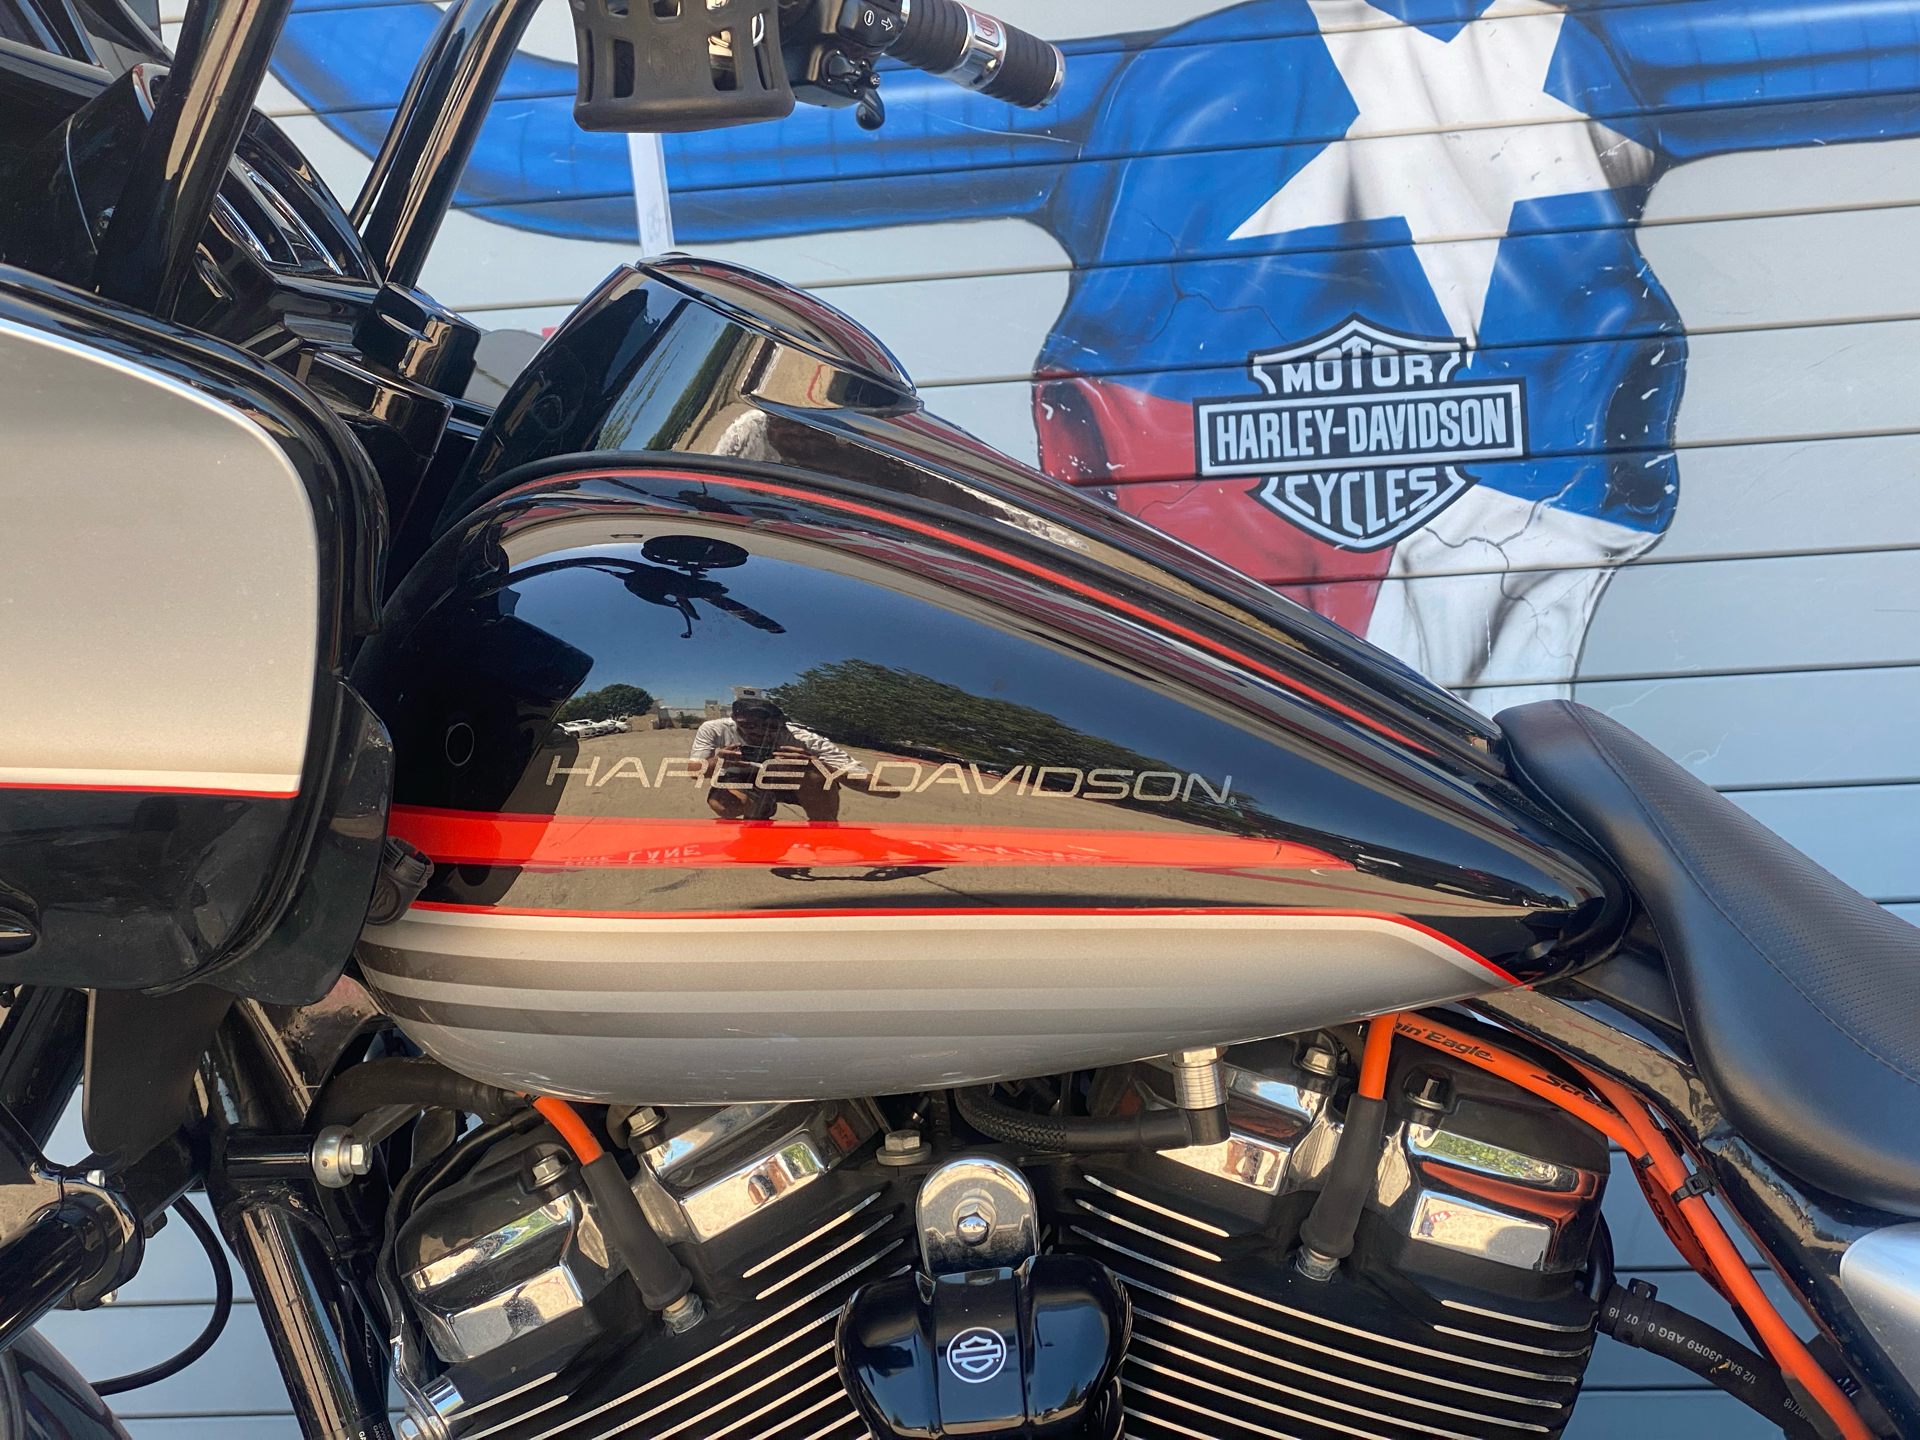 2019 Harley-Davidson Road Glide® Special in Grand Prairie, Texas - Photo 13